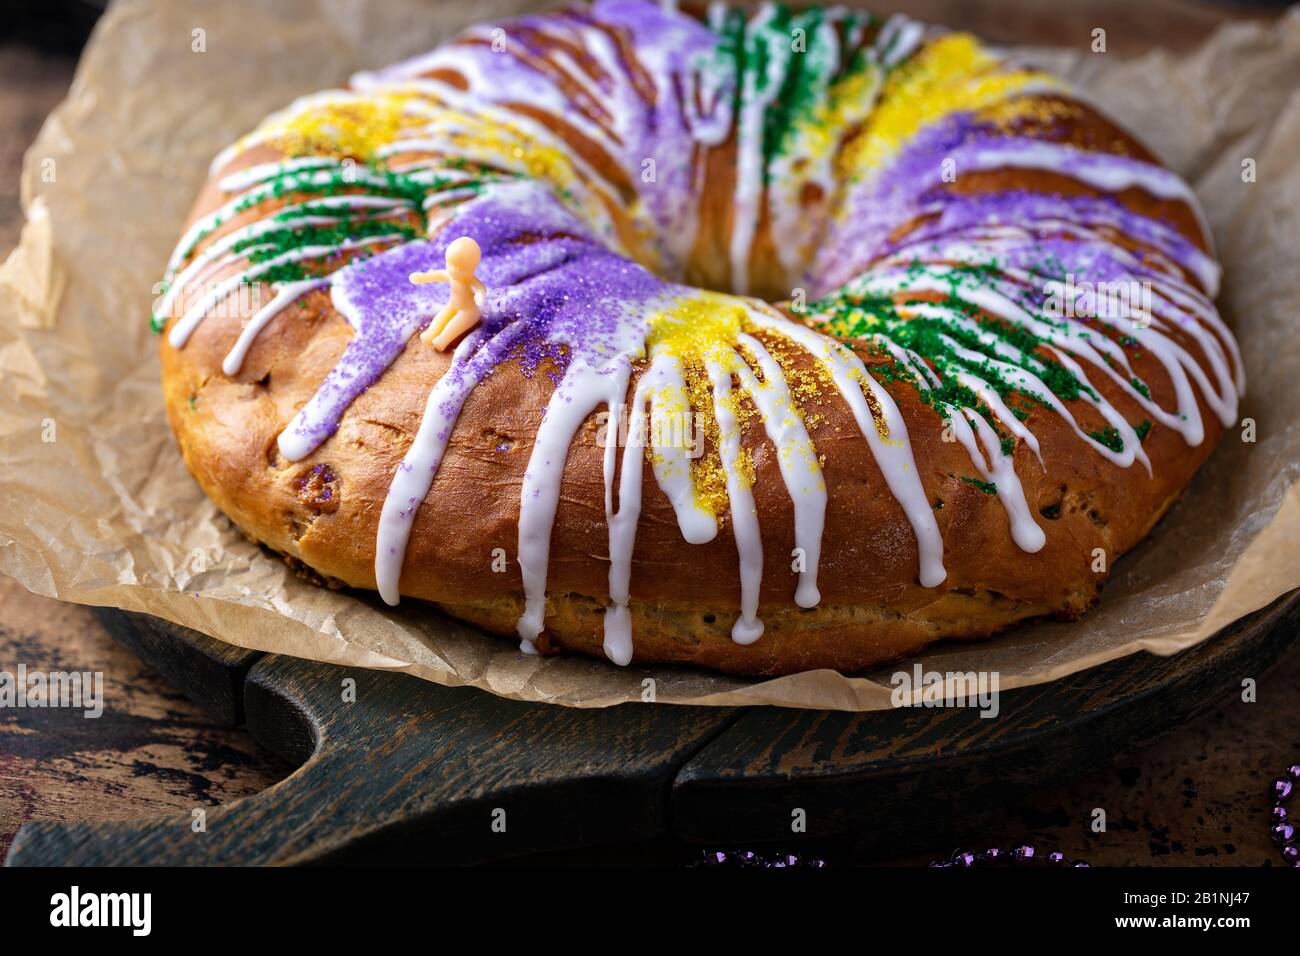 King cake for Mardi Gras Stock Photo - Alamy